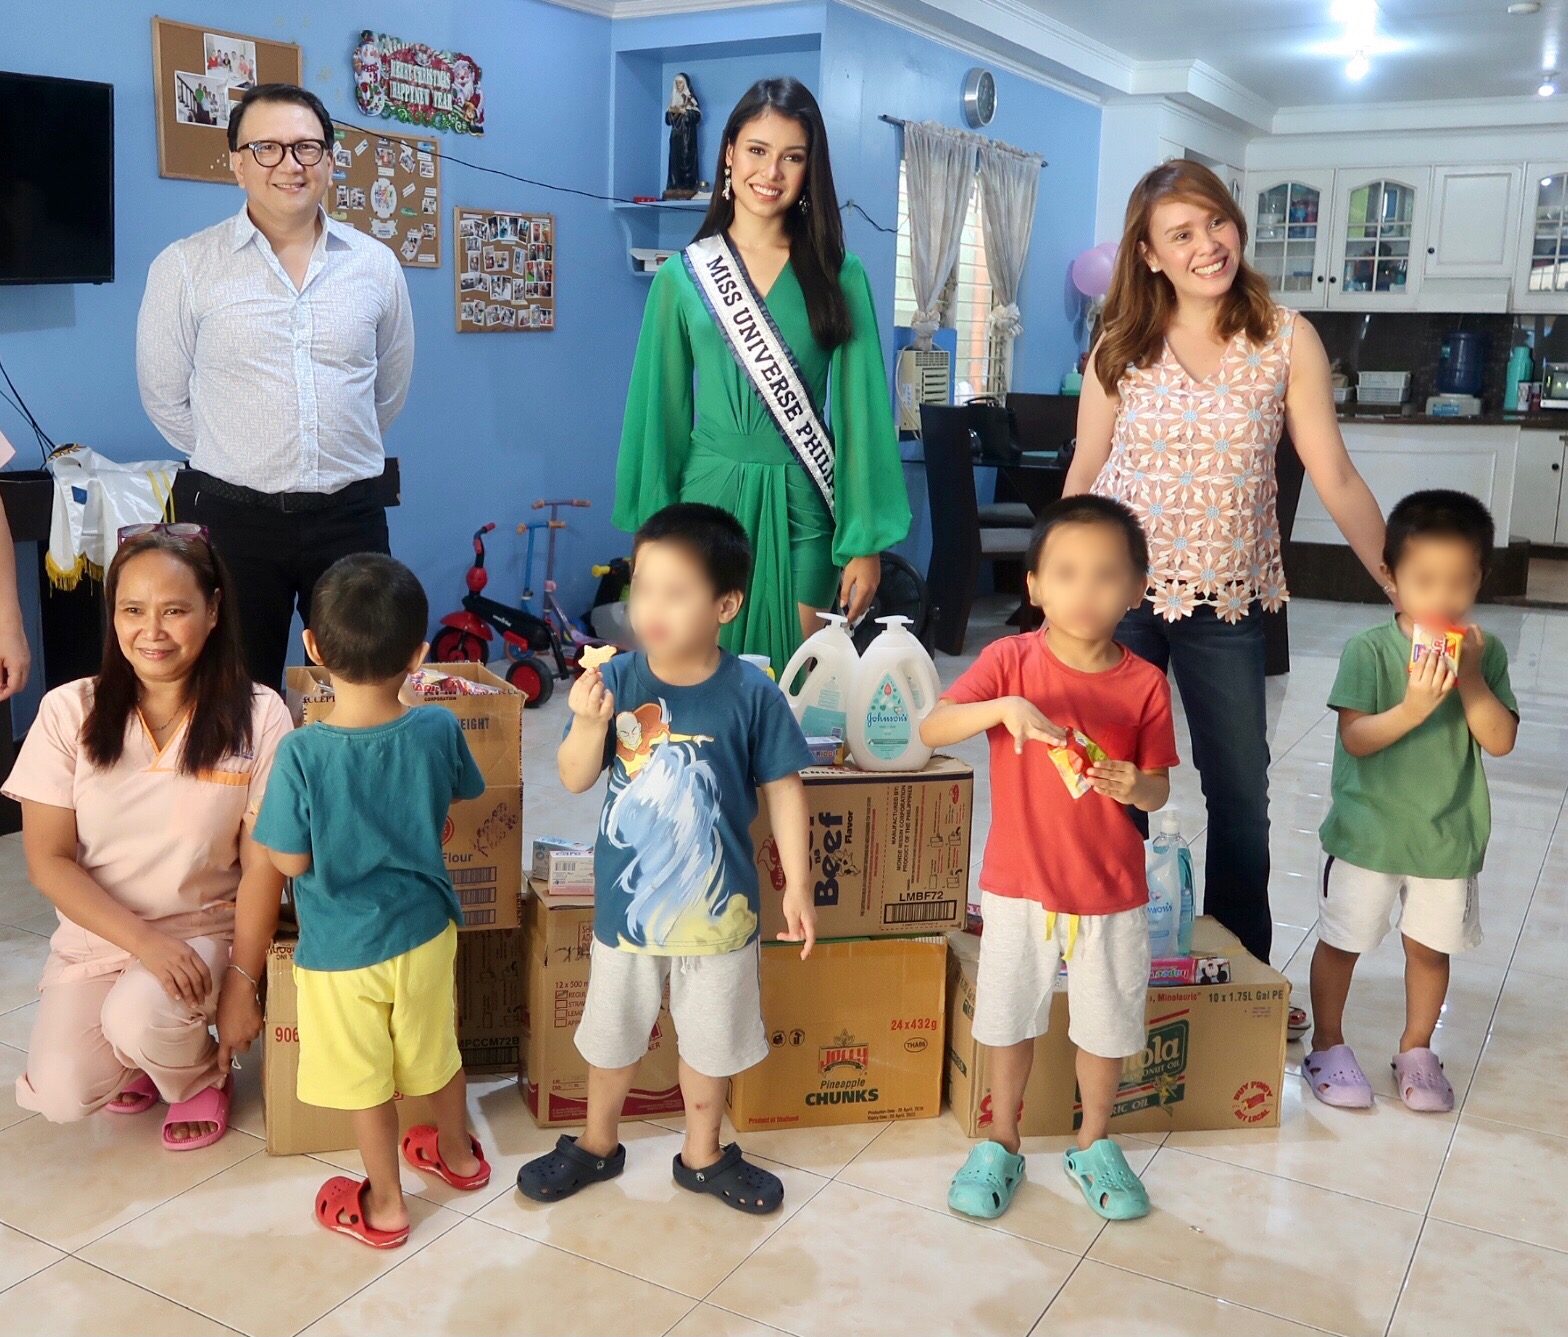 LOOK: Rabiya Mateo visits children’s foundation to spread Christmas cheer